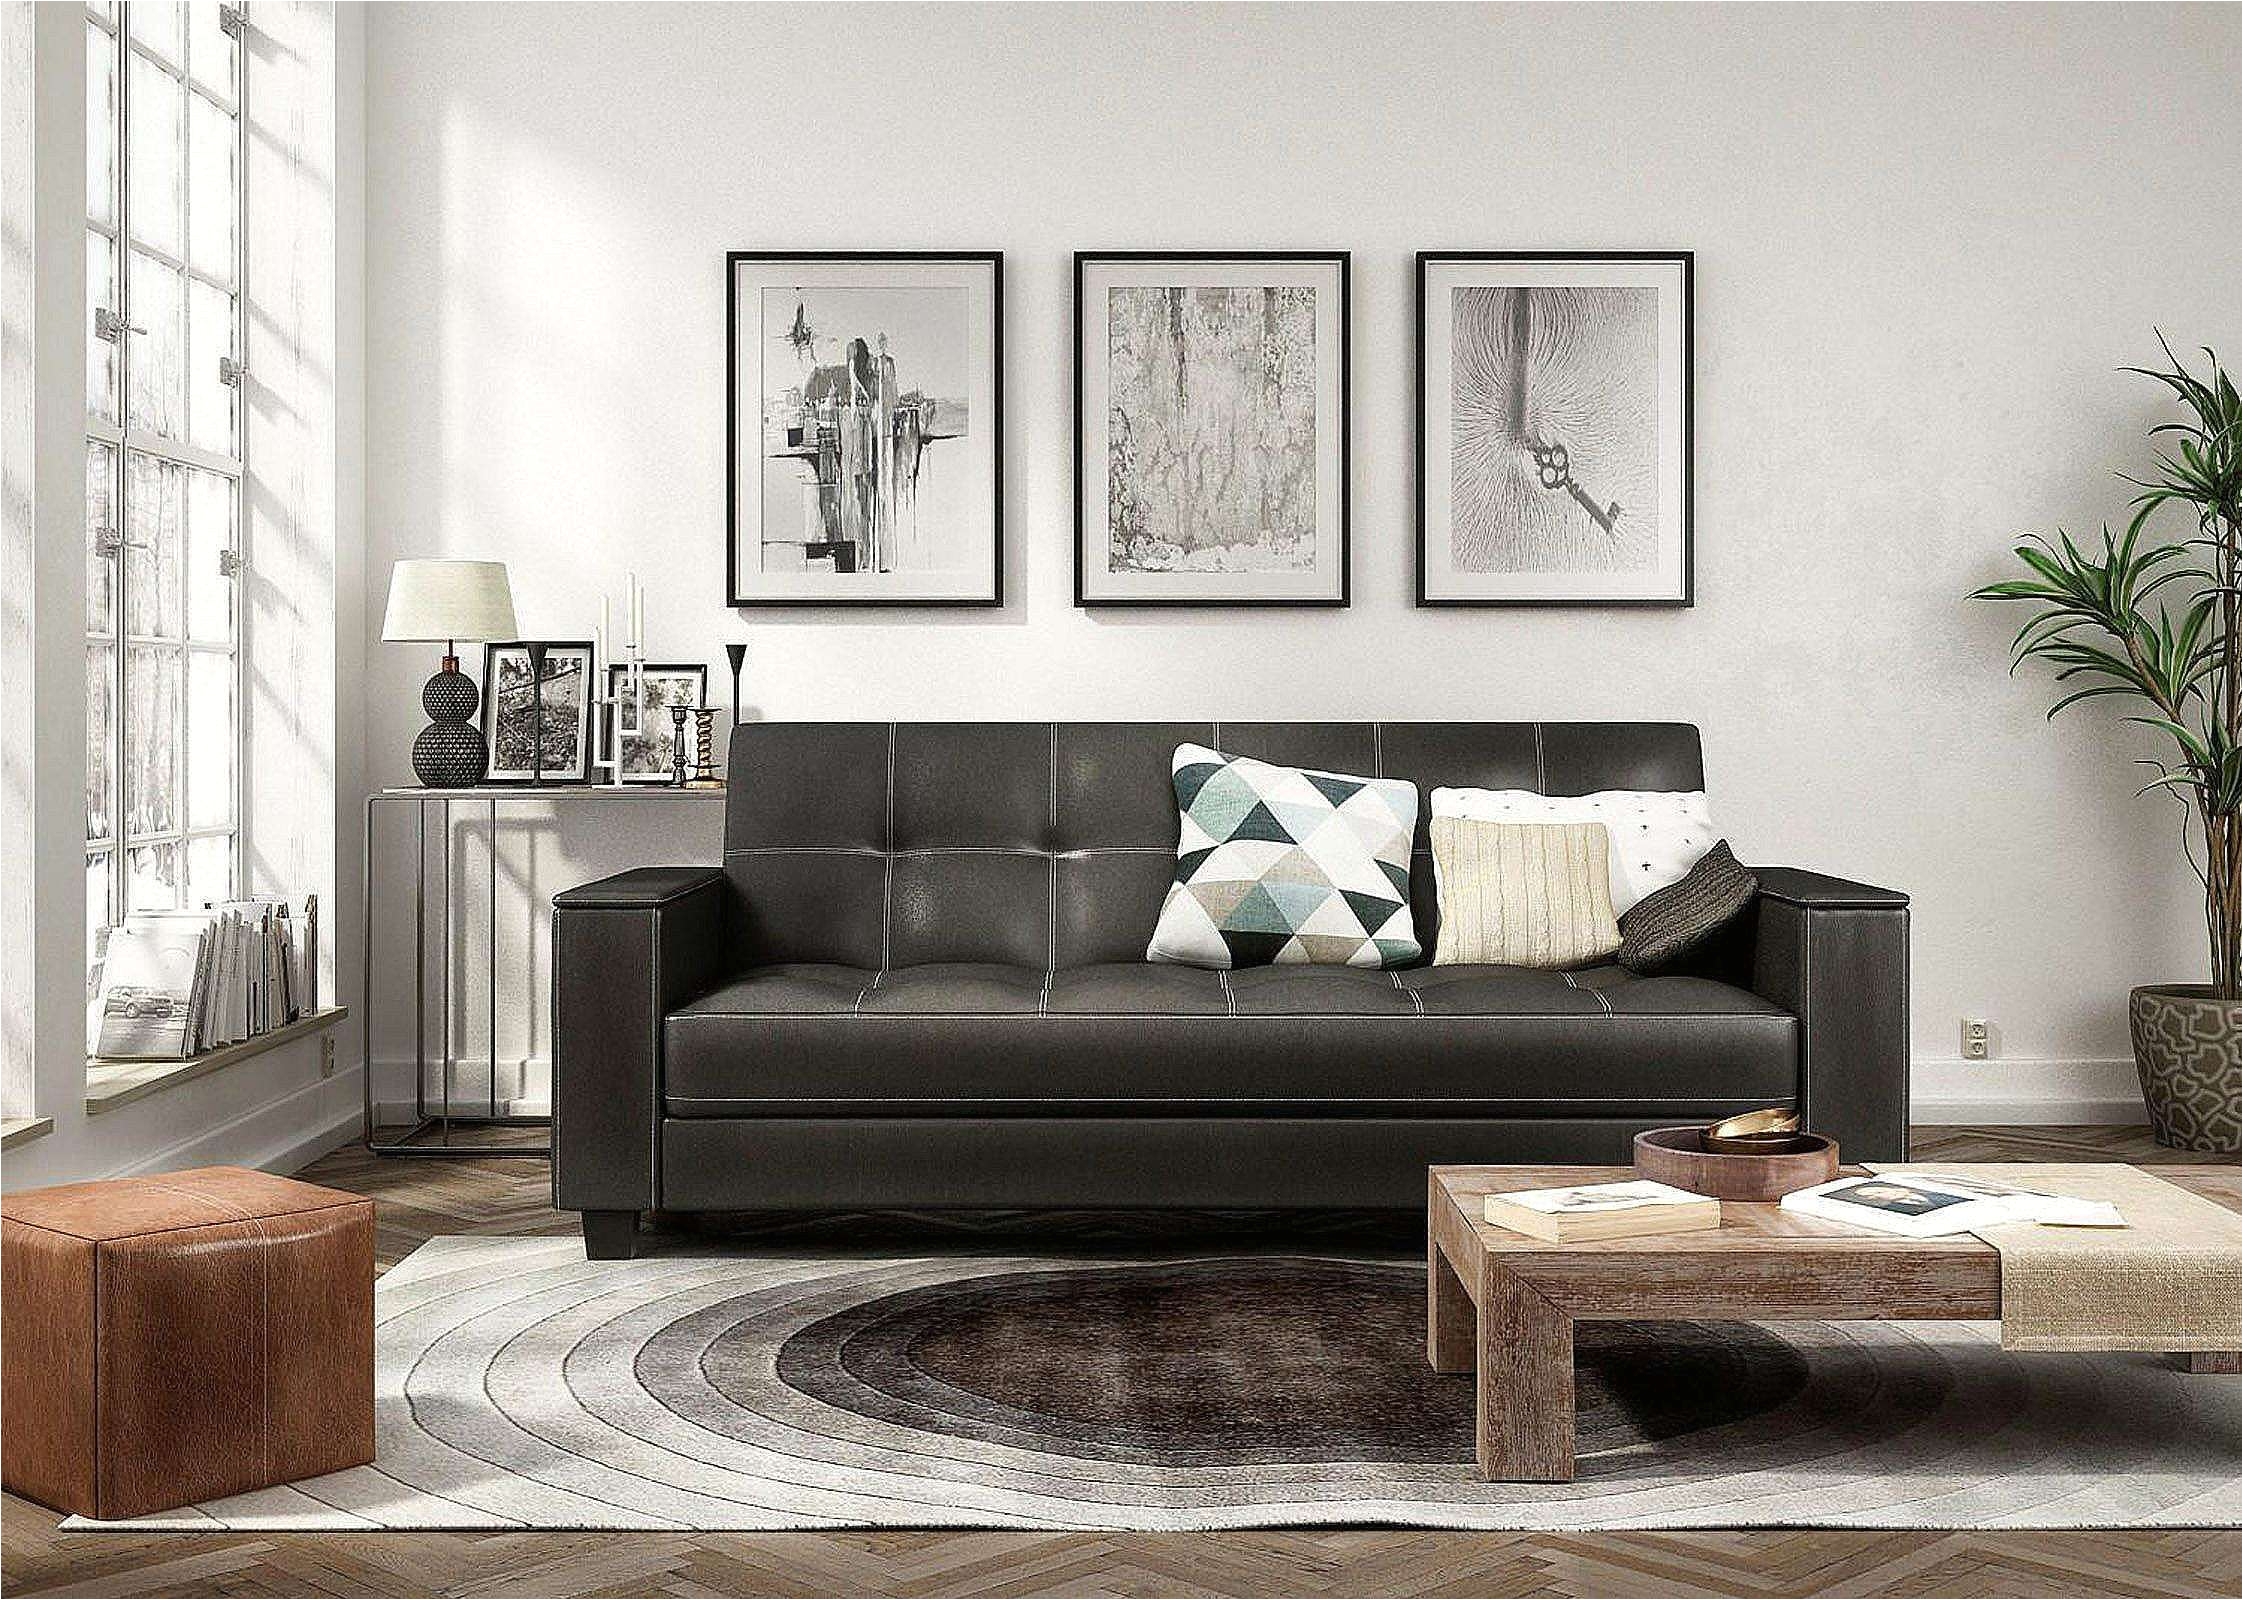 diy bedroom furniture fresh modern living room furniture new gunstige sofa macys furniture 0d